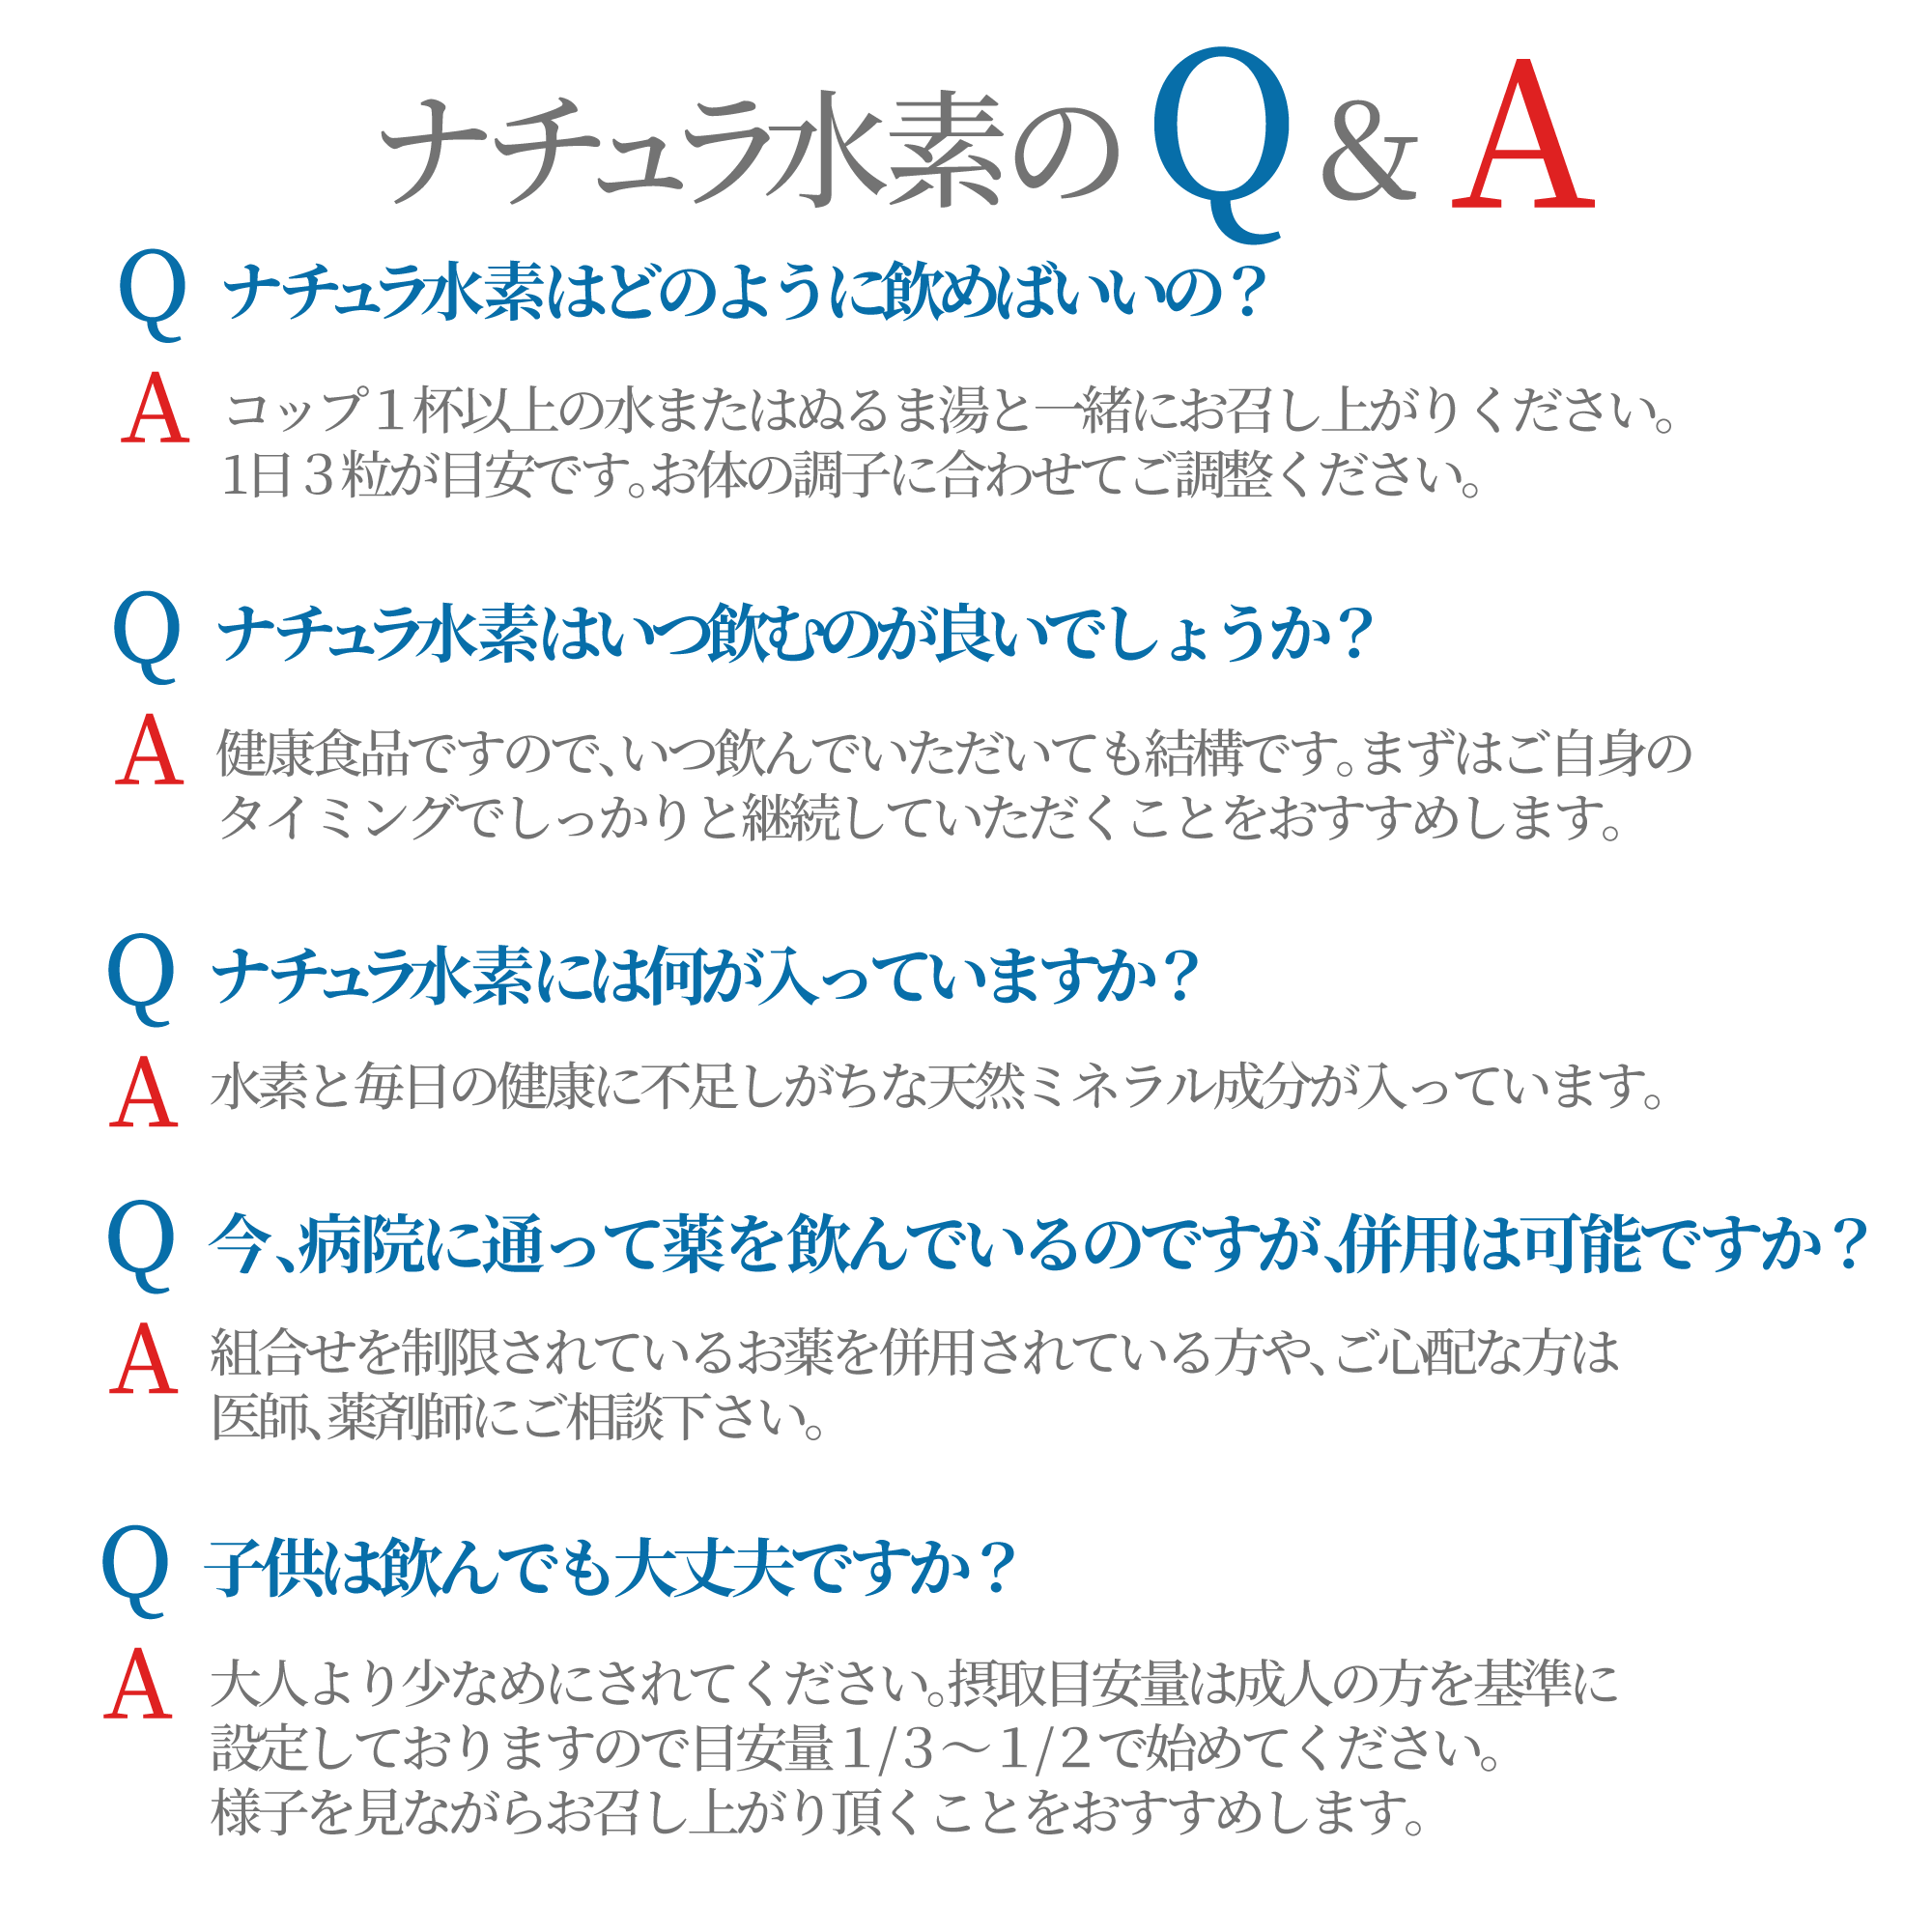 ”Q&A"